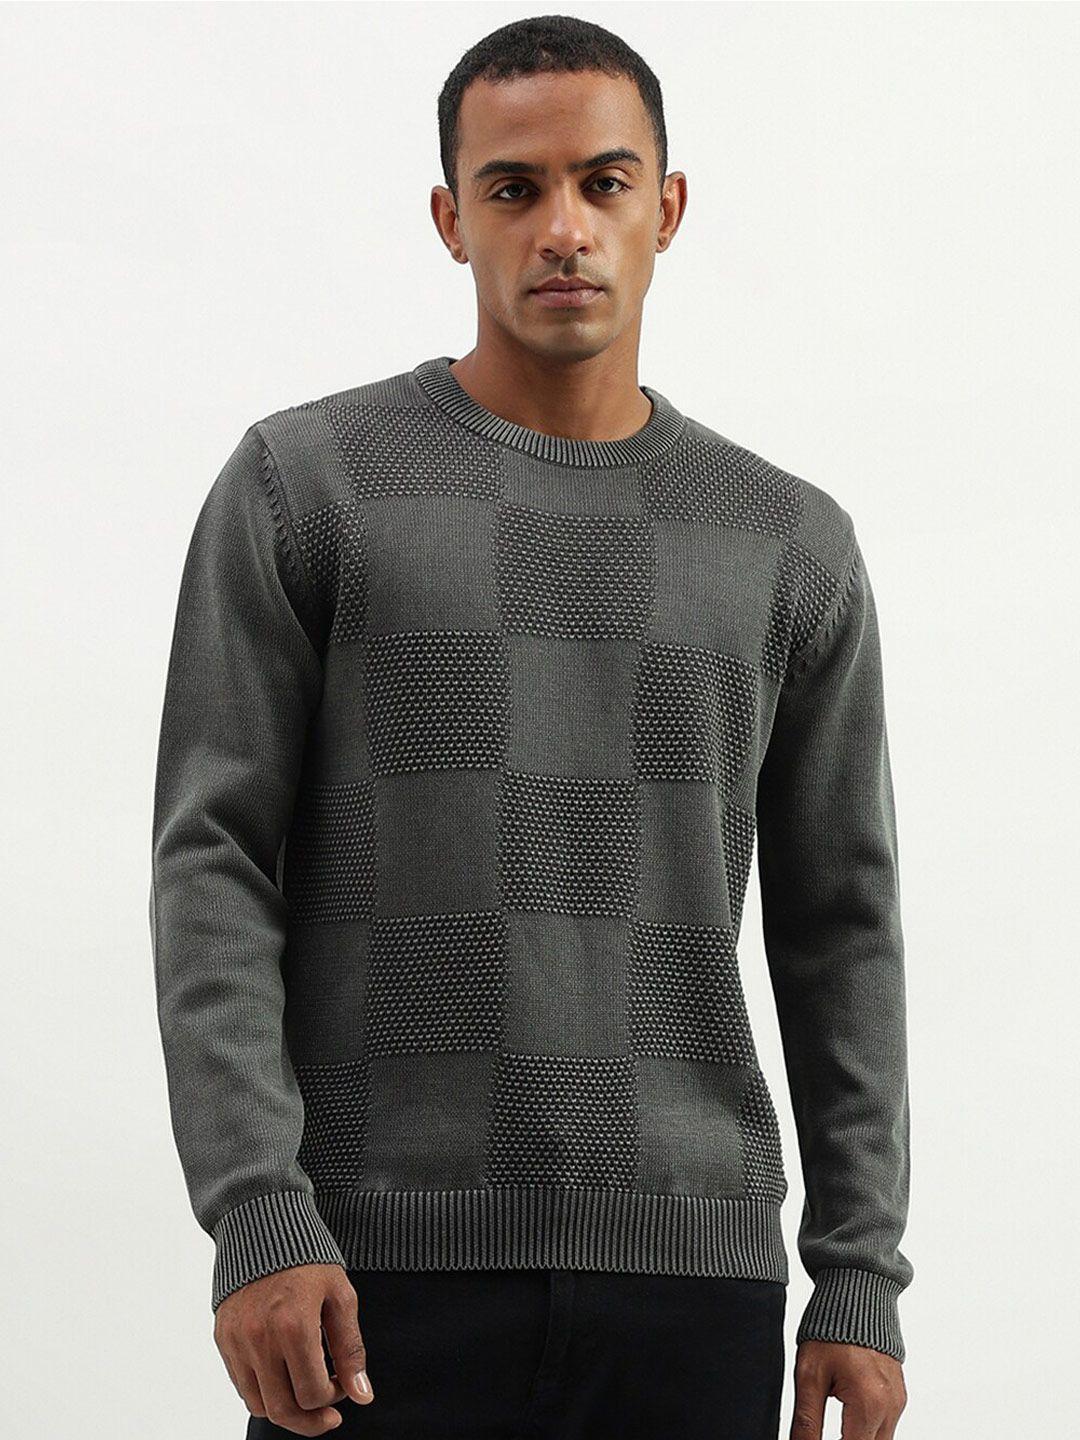 United Colors of Benetton Geometric Self Design Cotton Pullover